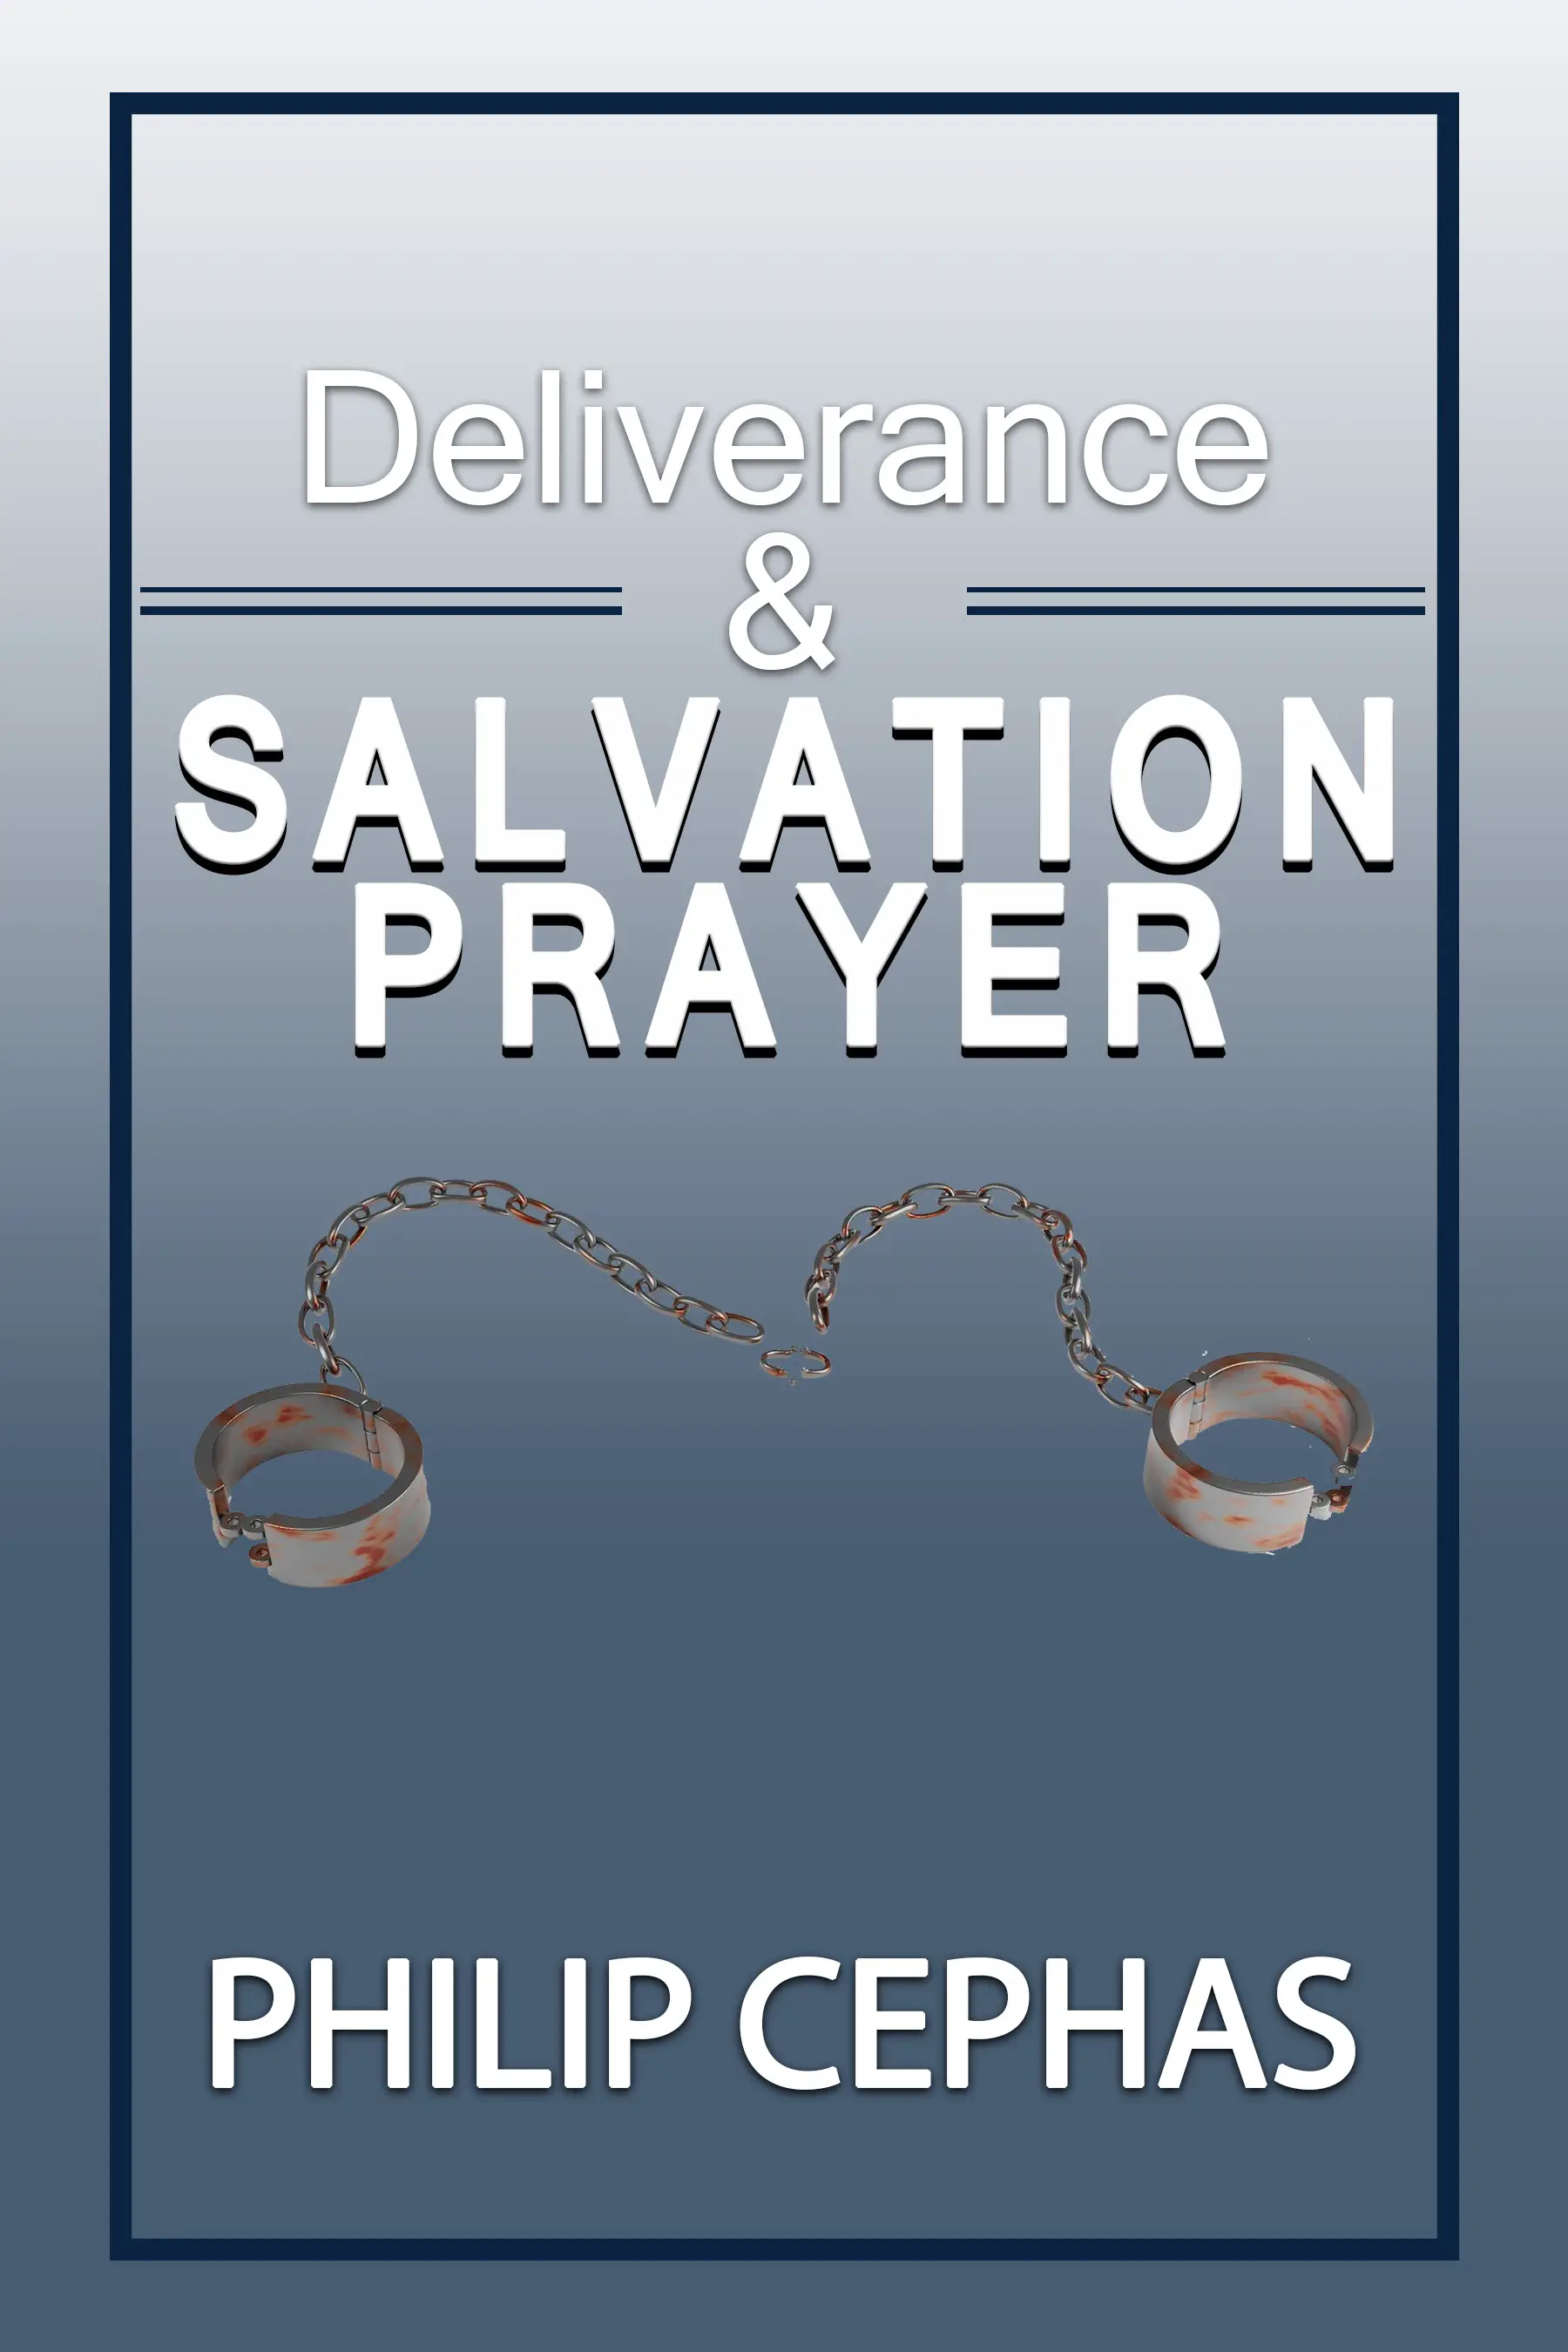 DOWNLOAD PDF: Deliverance & Salvation Prayer by Apostle Philip Cephas 23